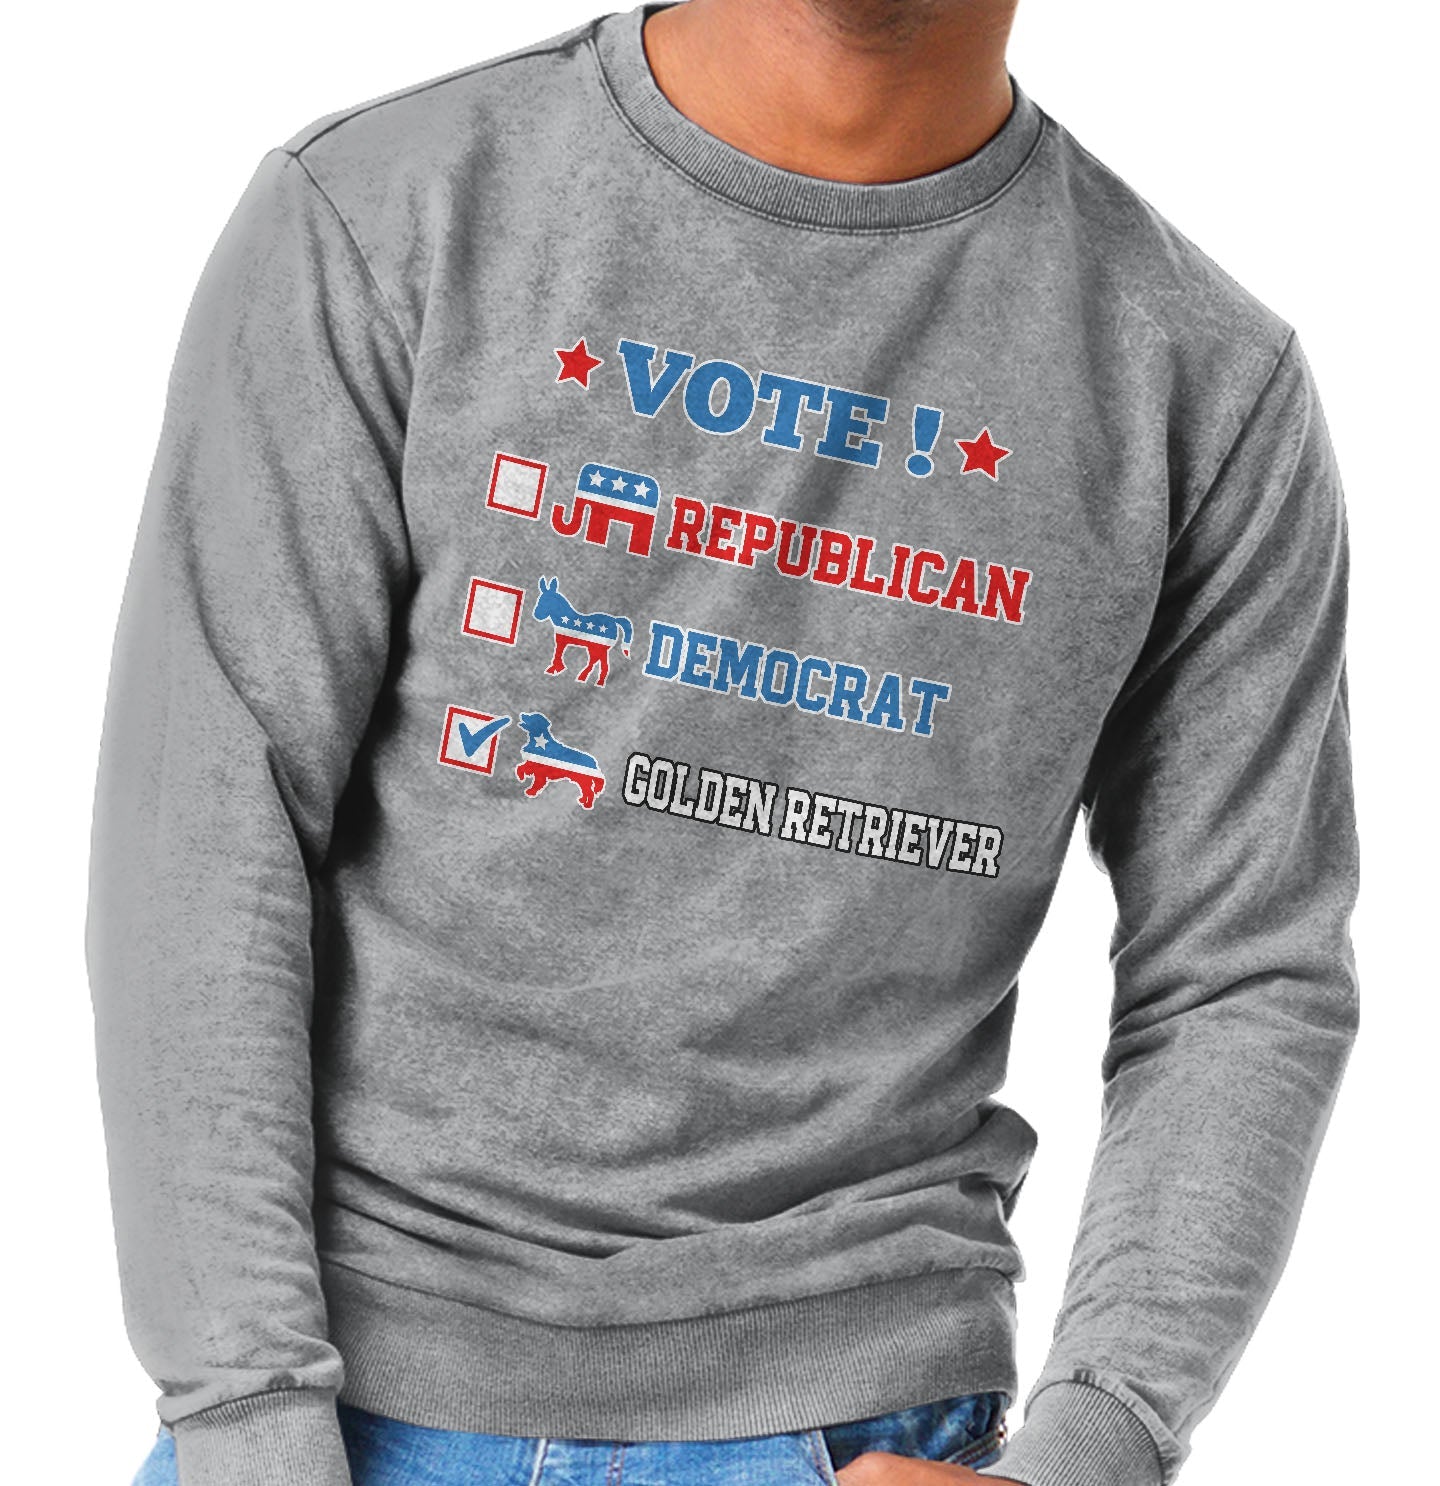 Vote for the Golden Retriever - Adult Unisex Crewneck Sweatshirt